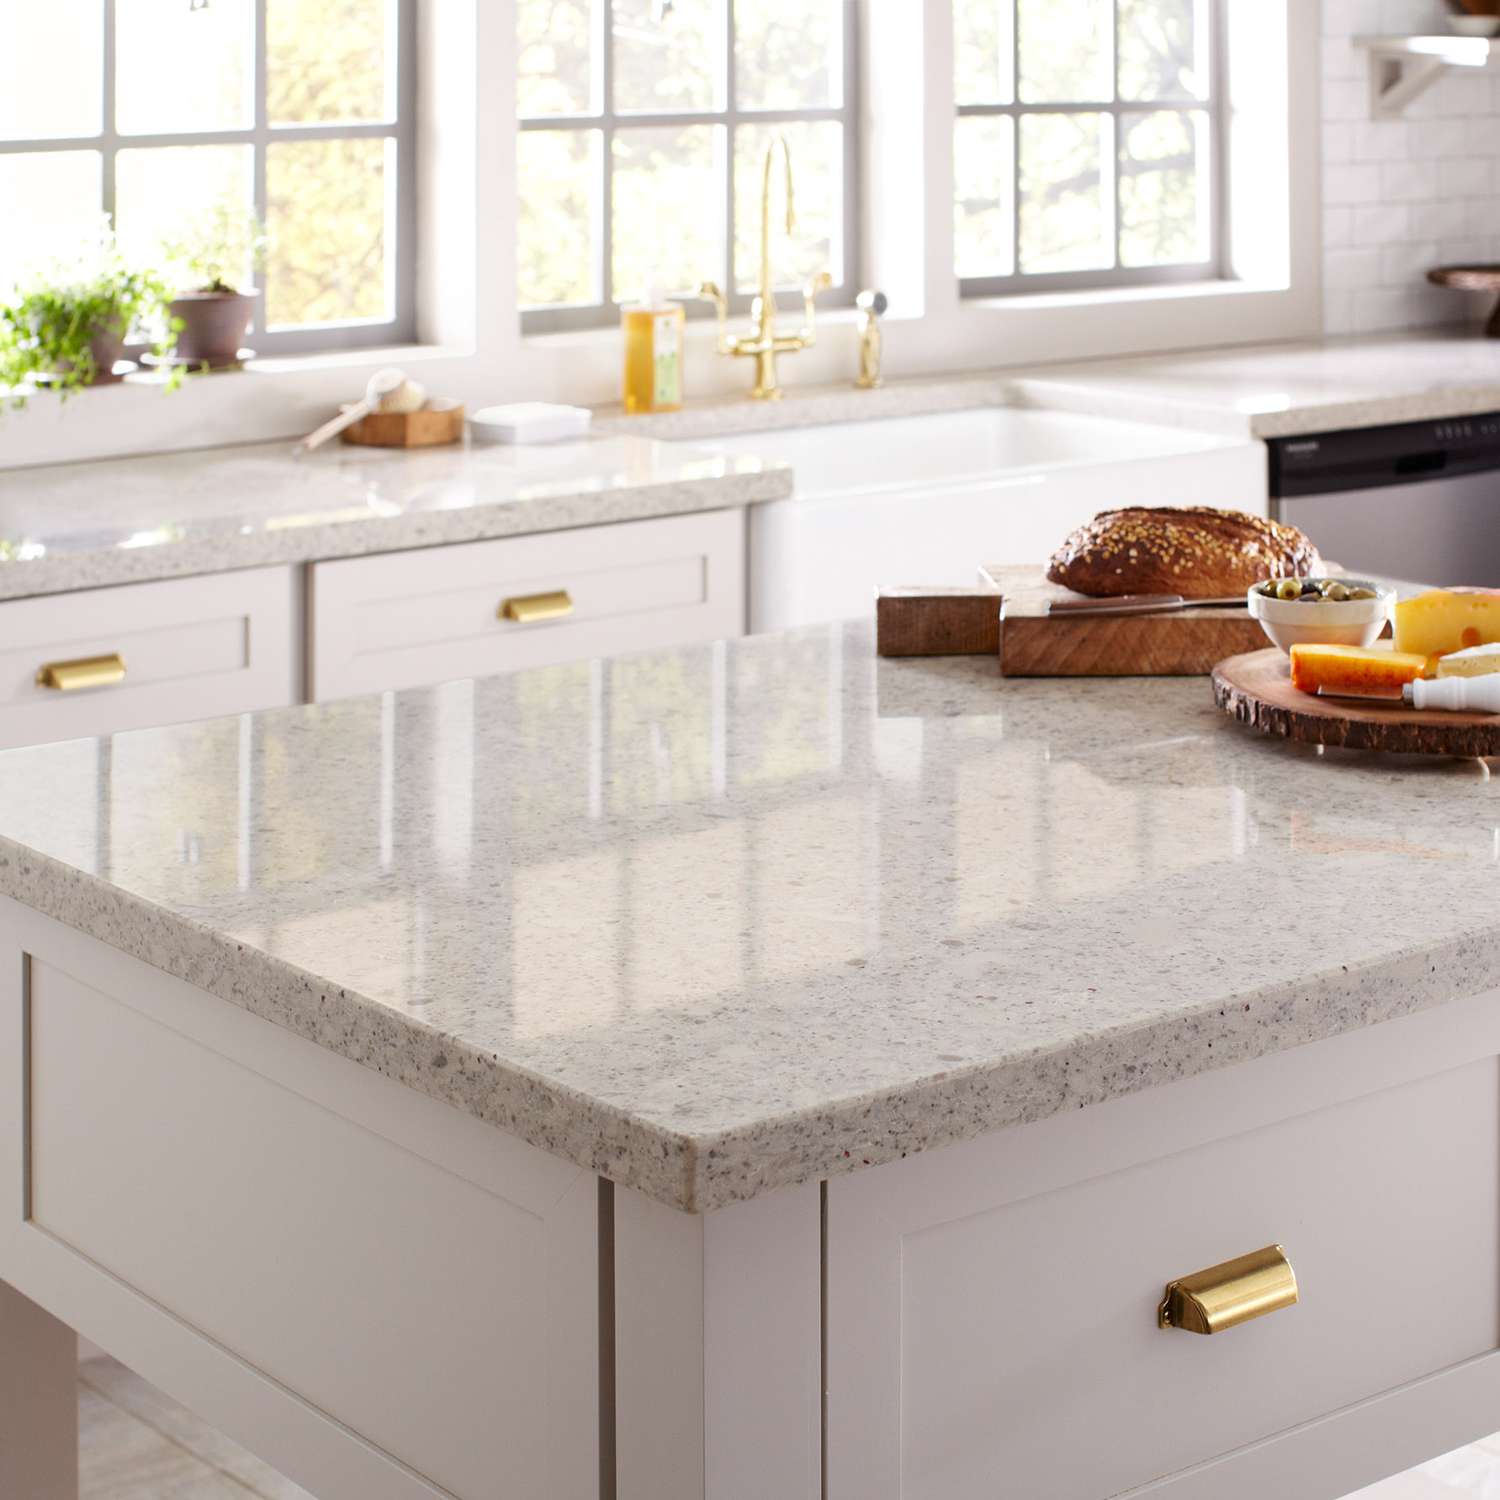 Quartz Or Granite Kitchen Countertops, What Countertops To Choose